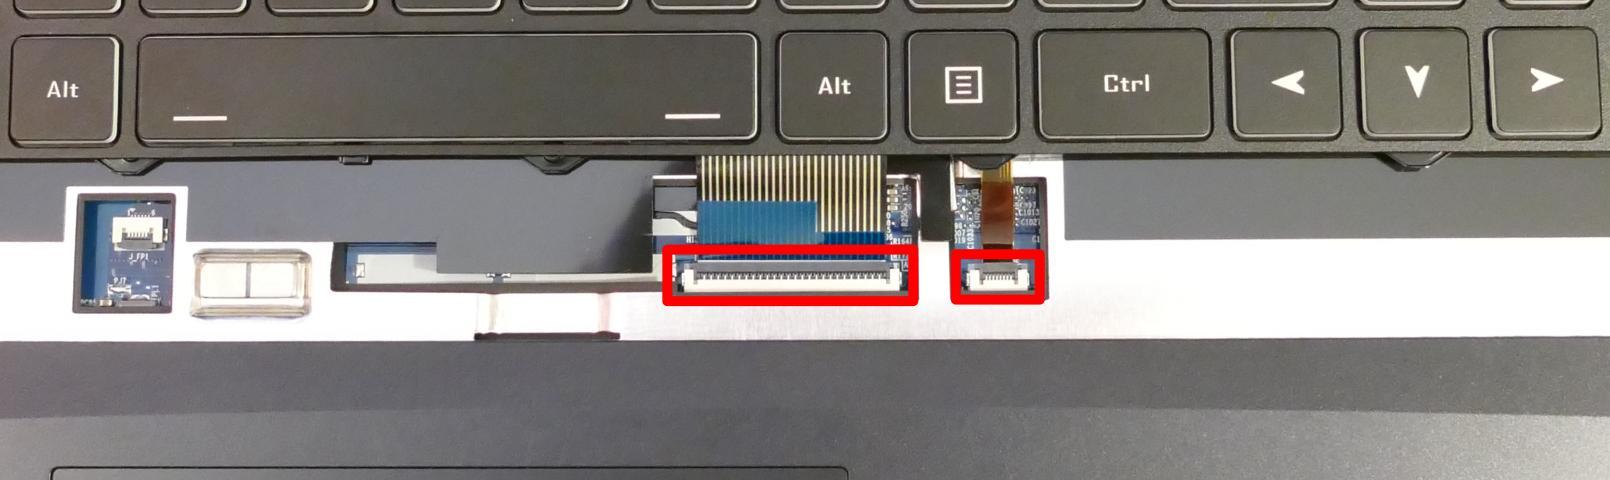 Keyboard connectors